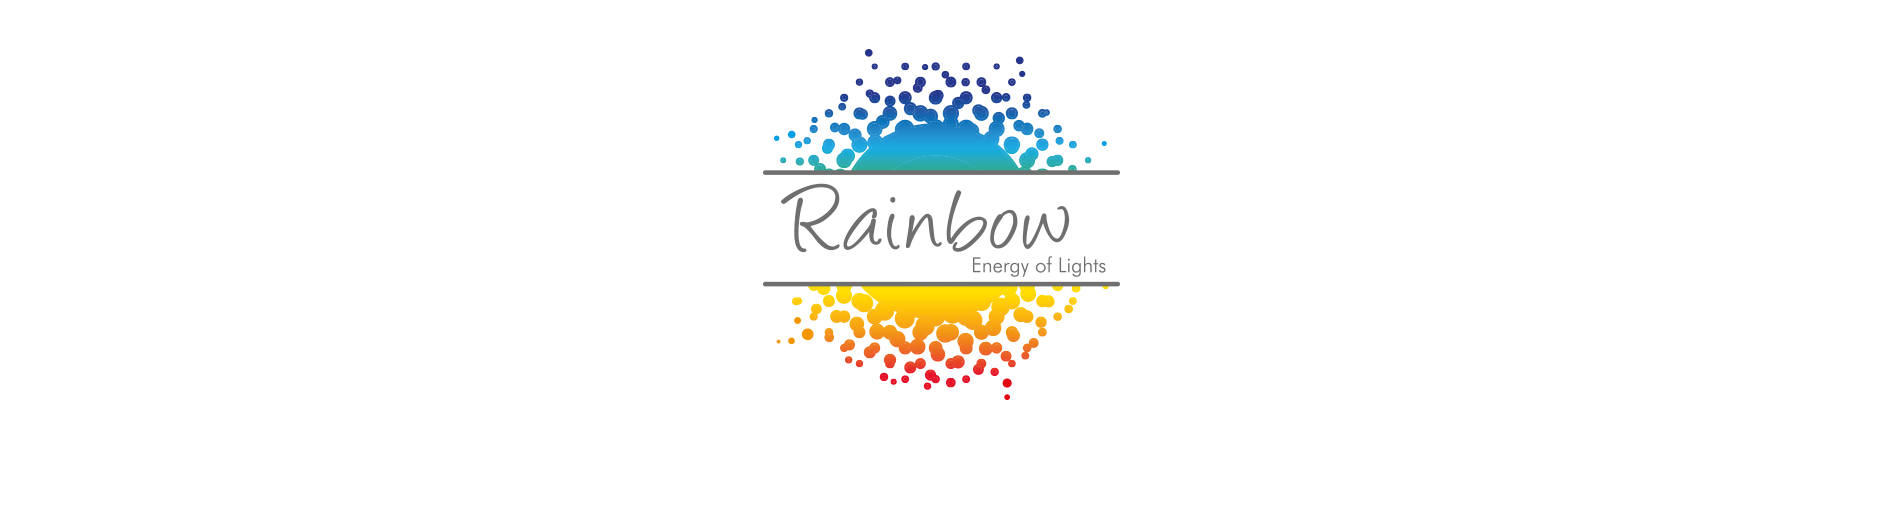 Rainbow - Energy of Lights